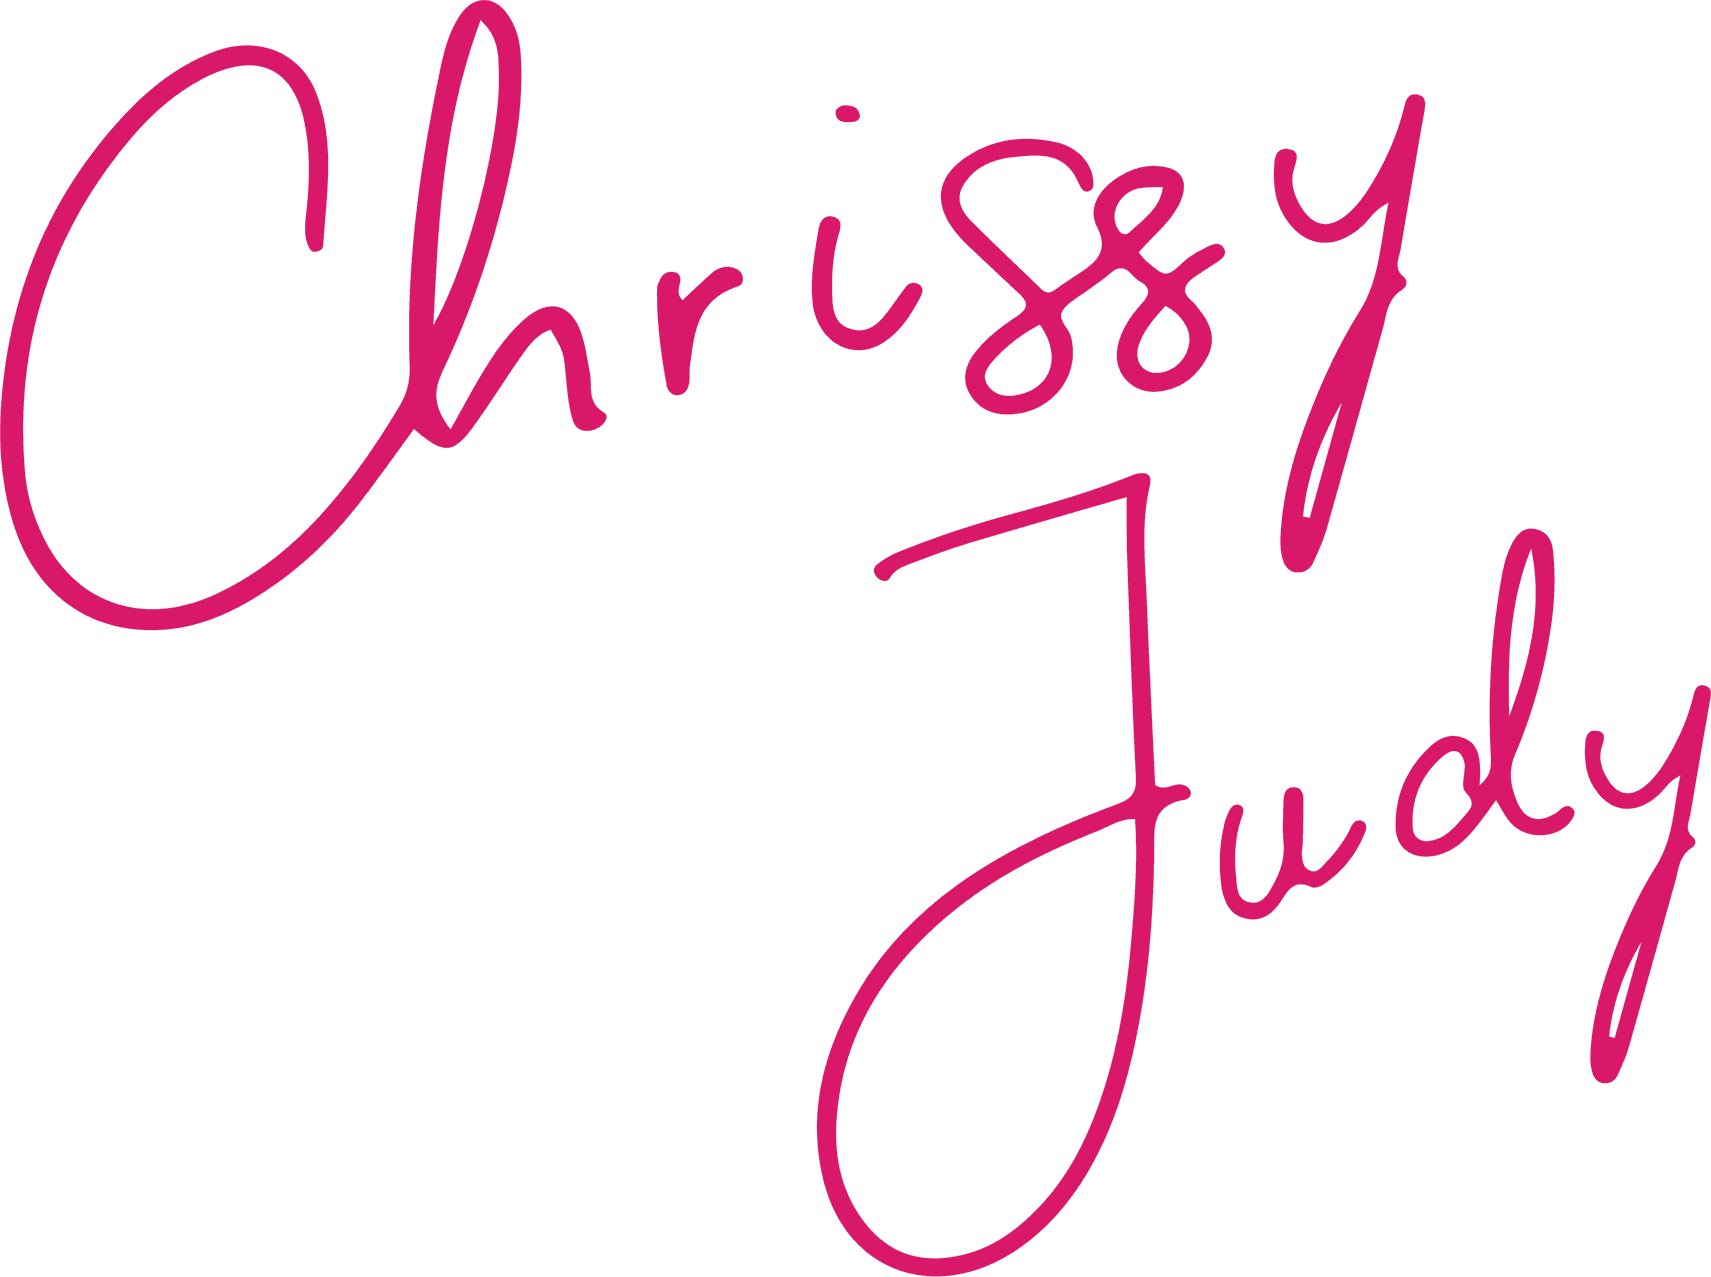 Chrissy Judy logo